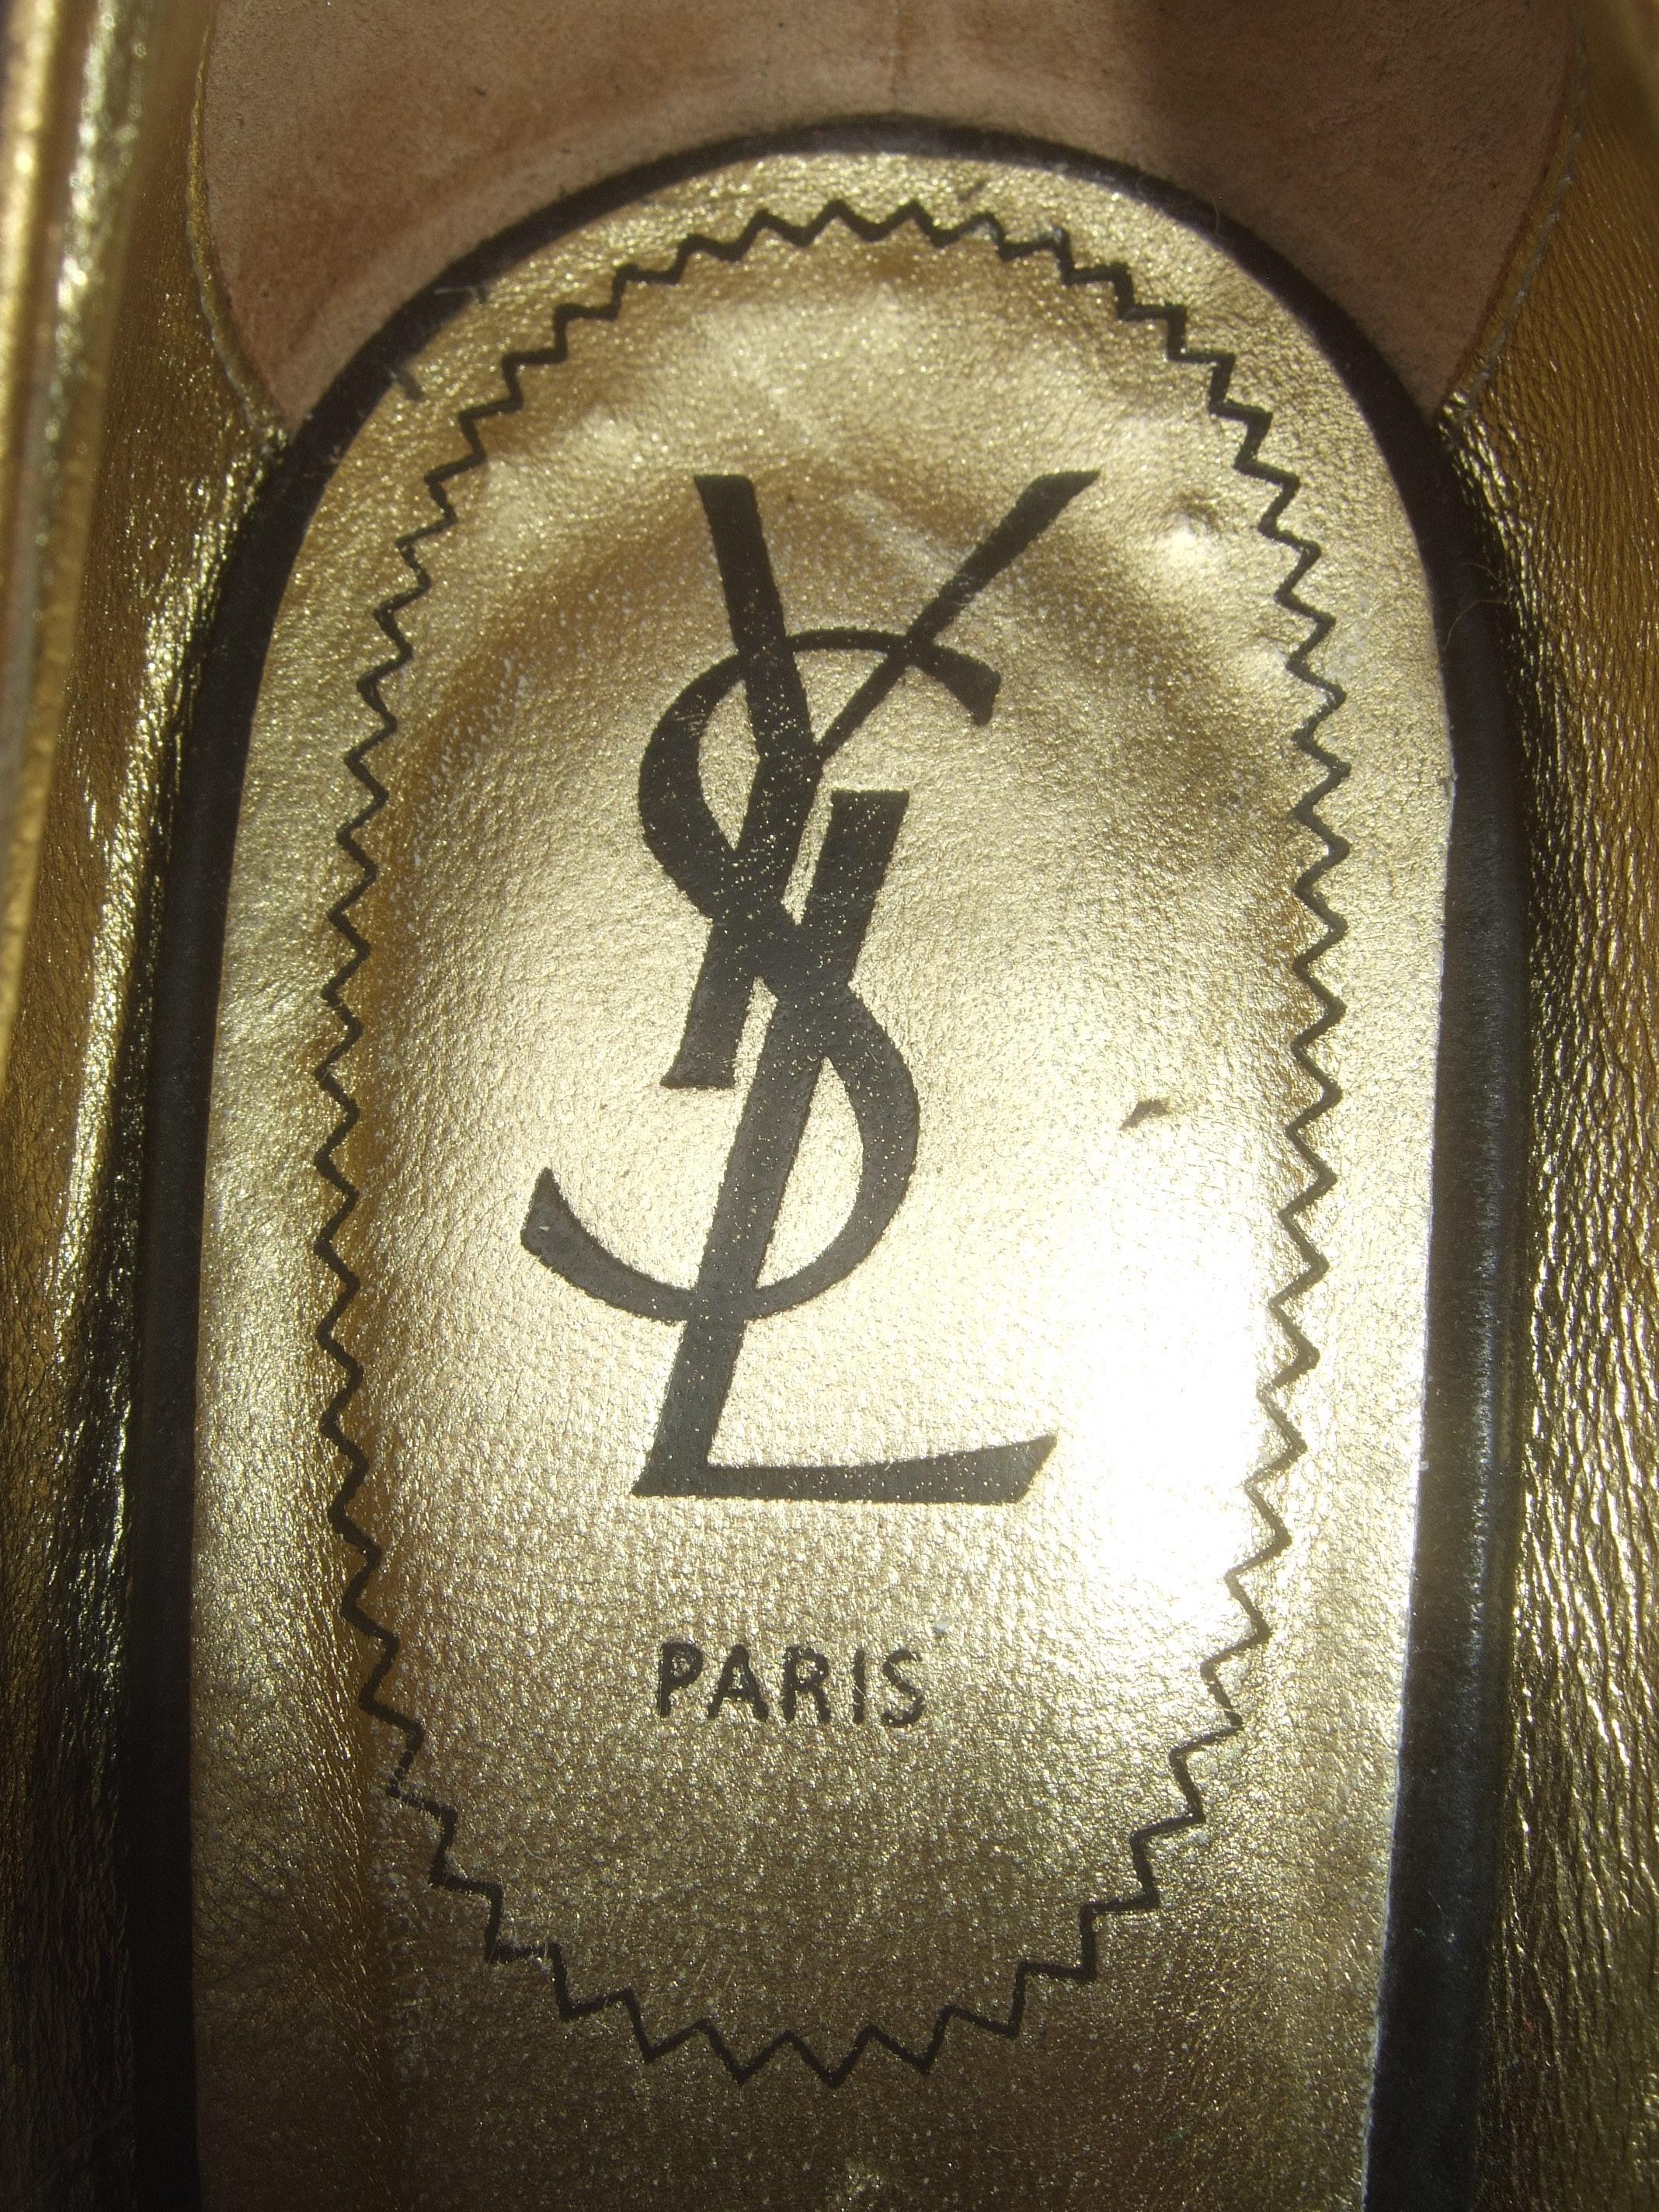 Yves Saint Laurent Paris Black Suede Gold Leather Peep Toe Wedge Shoes Size 40 For Sale 1